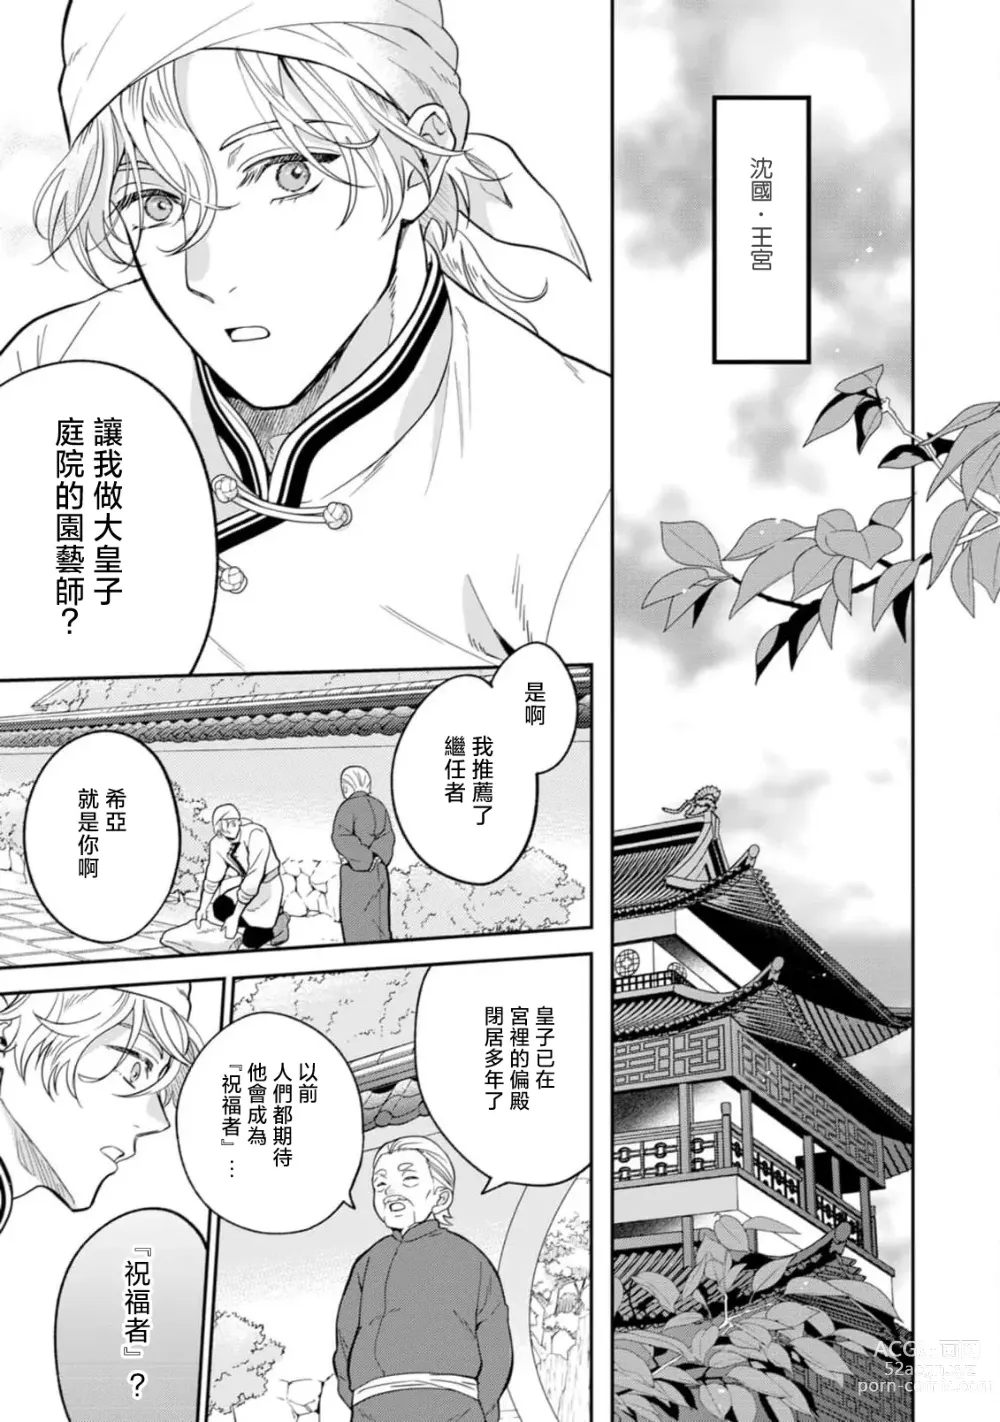 Page 5 of manga 伪装起来的Ω与庭院秘事 1